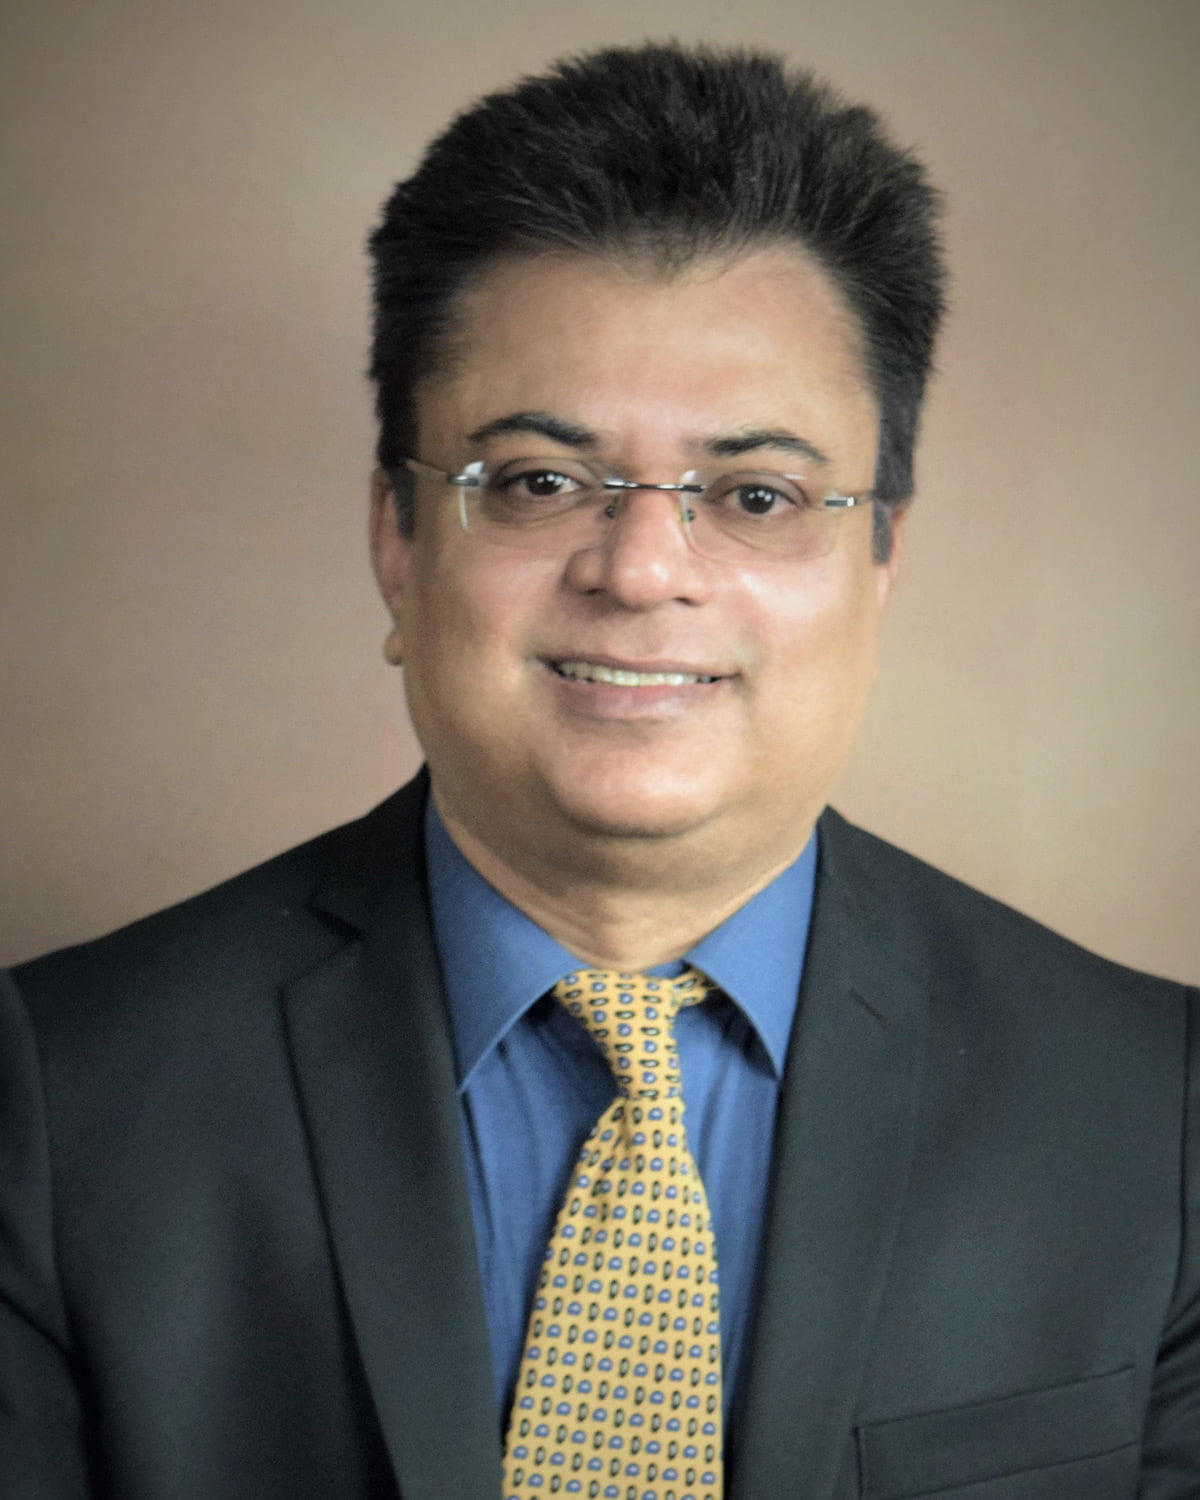 Professional headshot photograph of Shiv Dhiman, MD